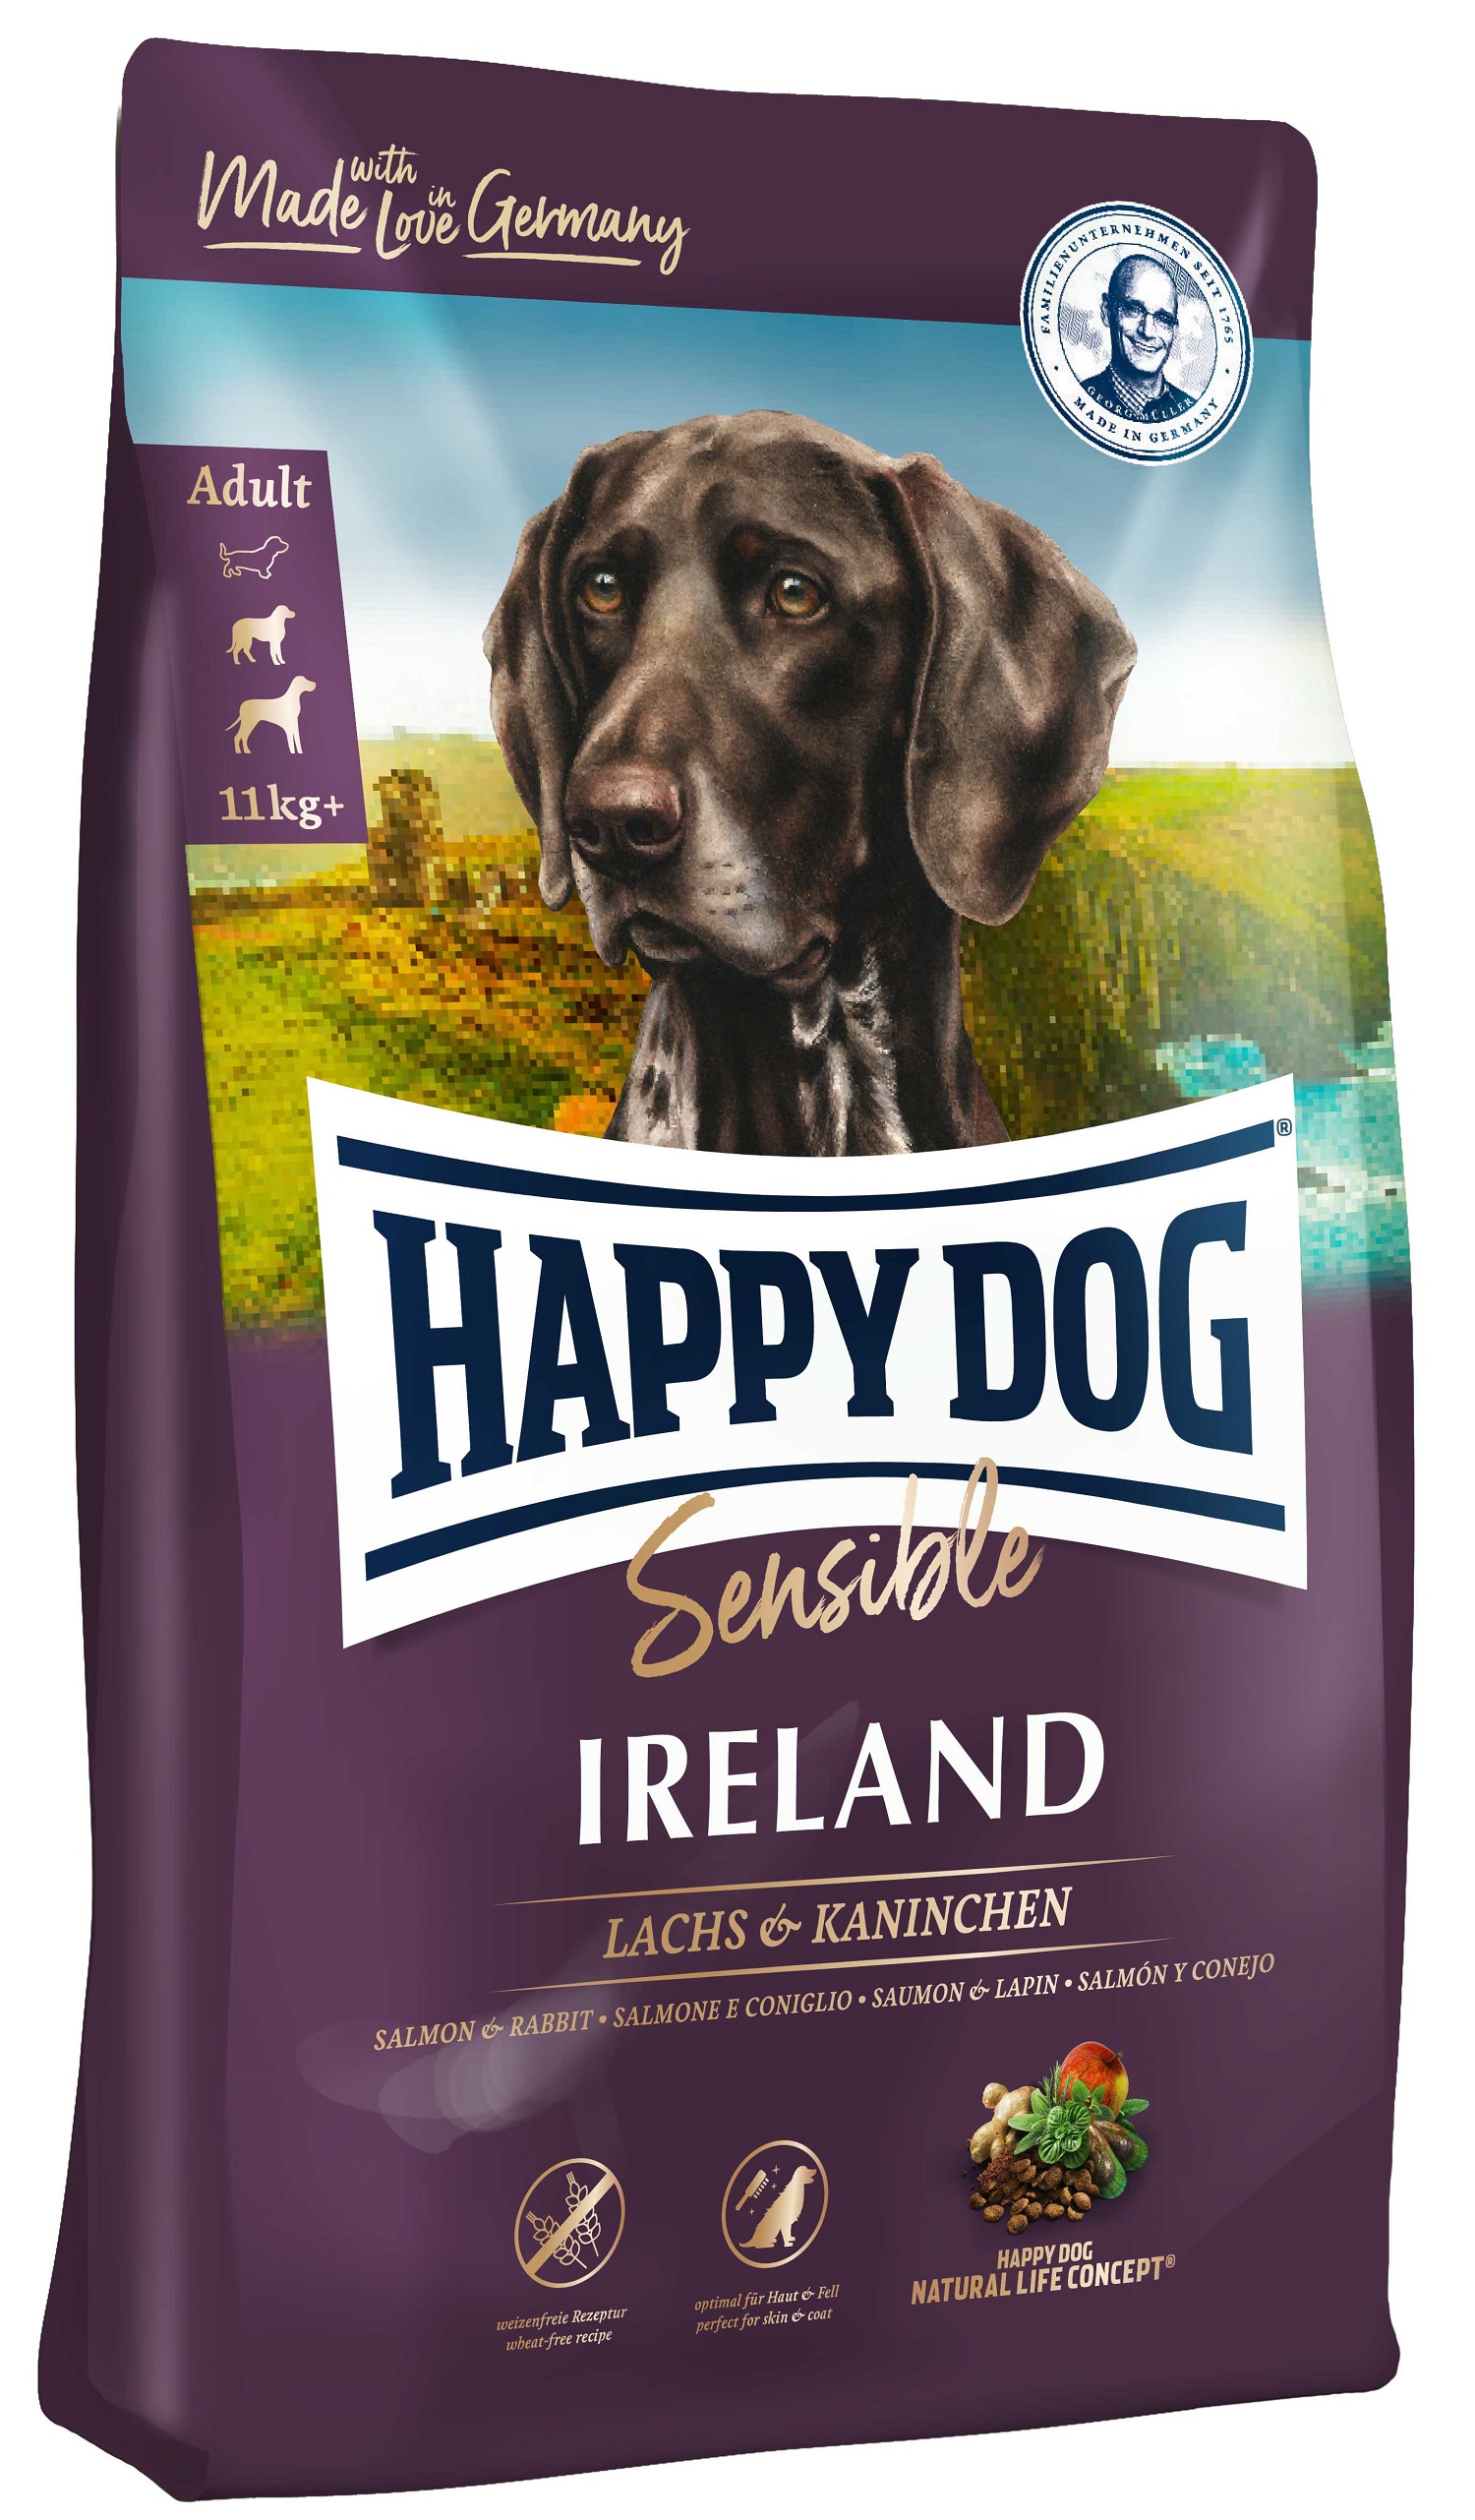 Happy Dog Supreme Sensible Ireland 4 kg